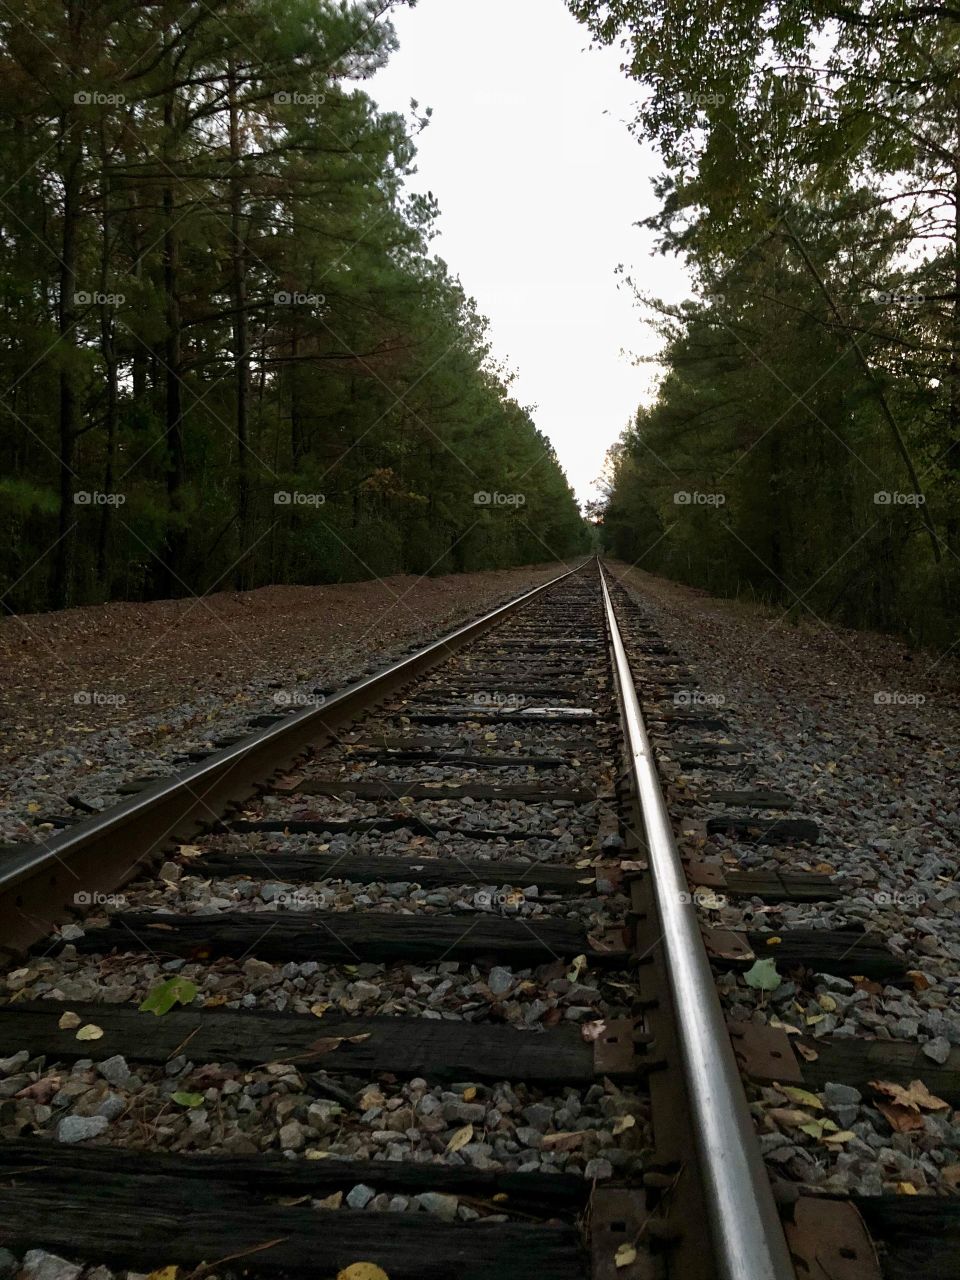 Railroad tracks at dusk